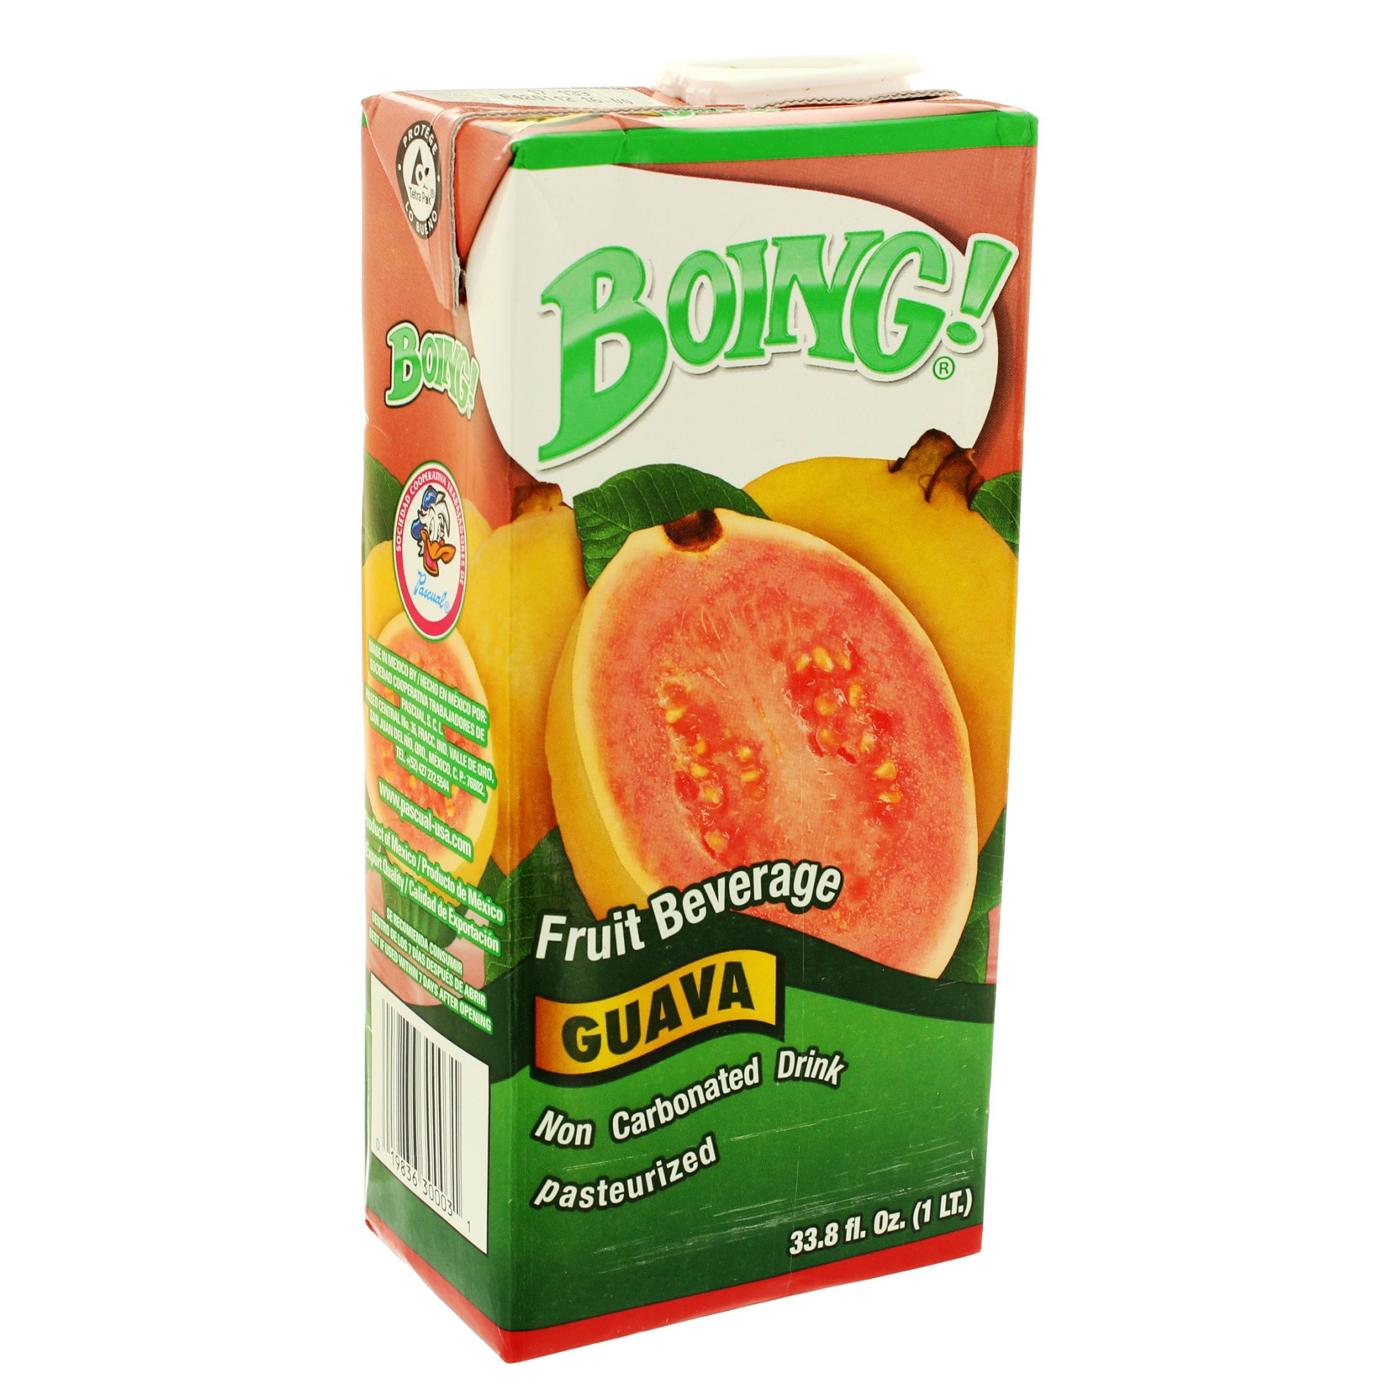 Boing! Guava Fruit Beverage; image 1 of 2